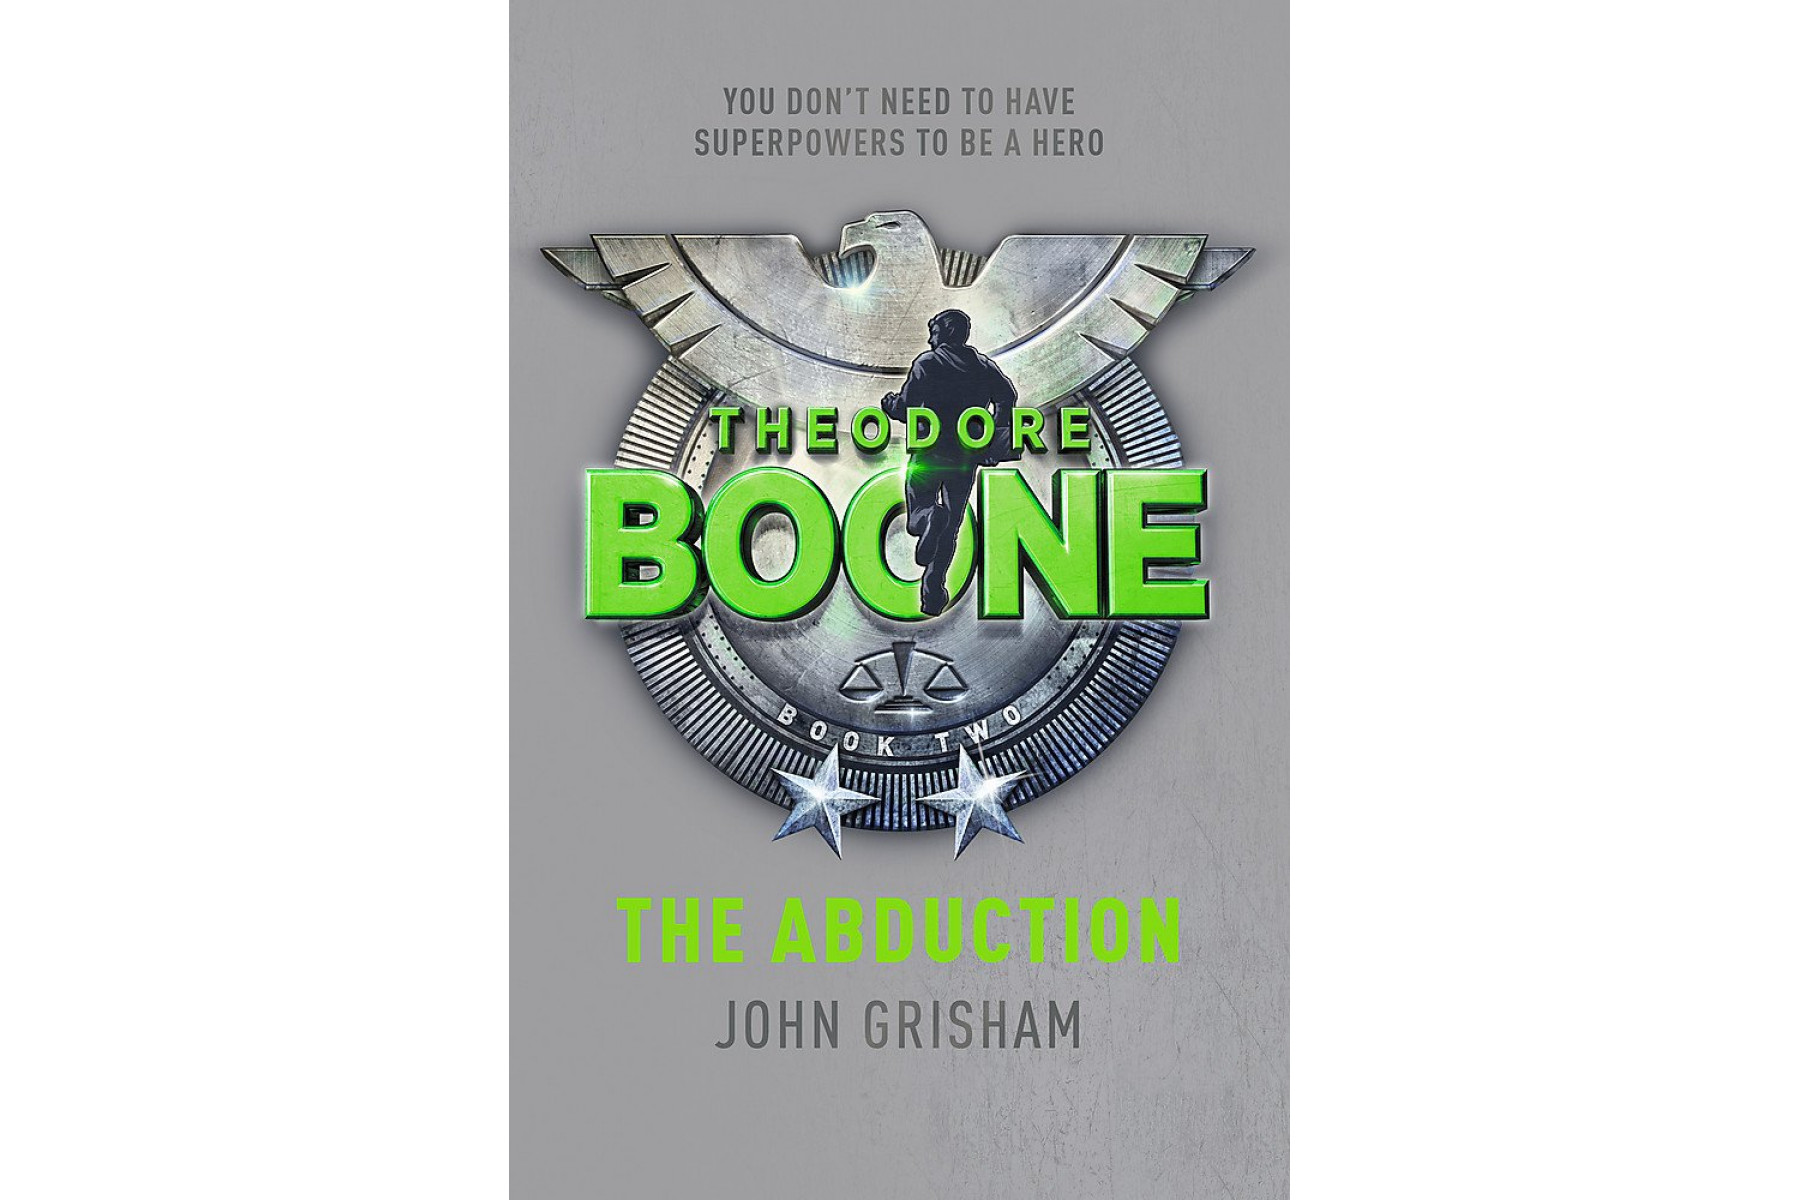 Theodore Boone: The Abduction (Book 2)